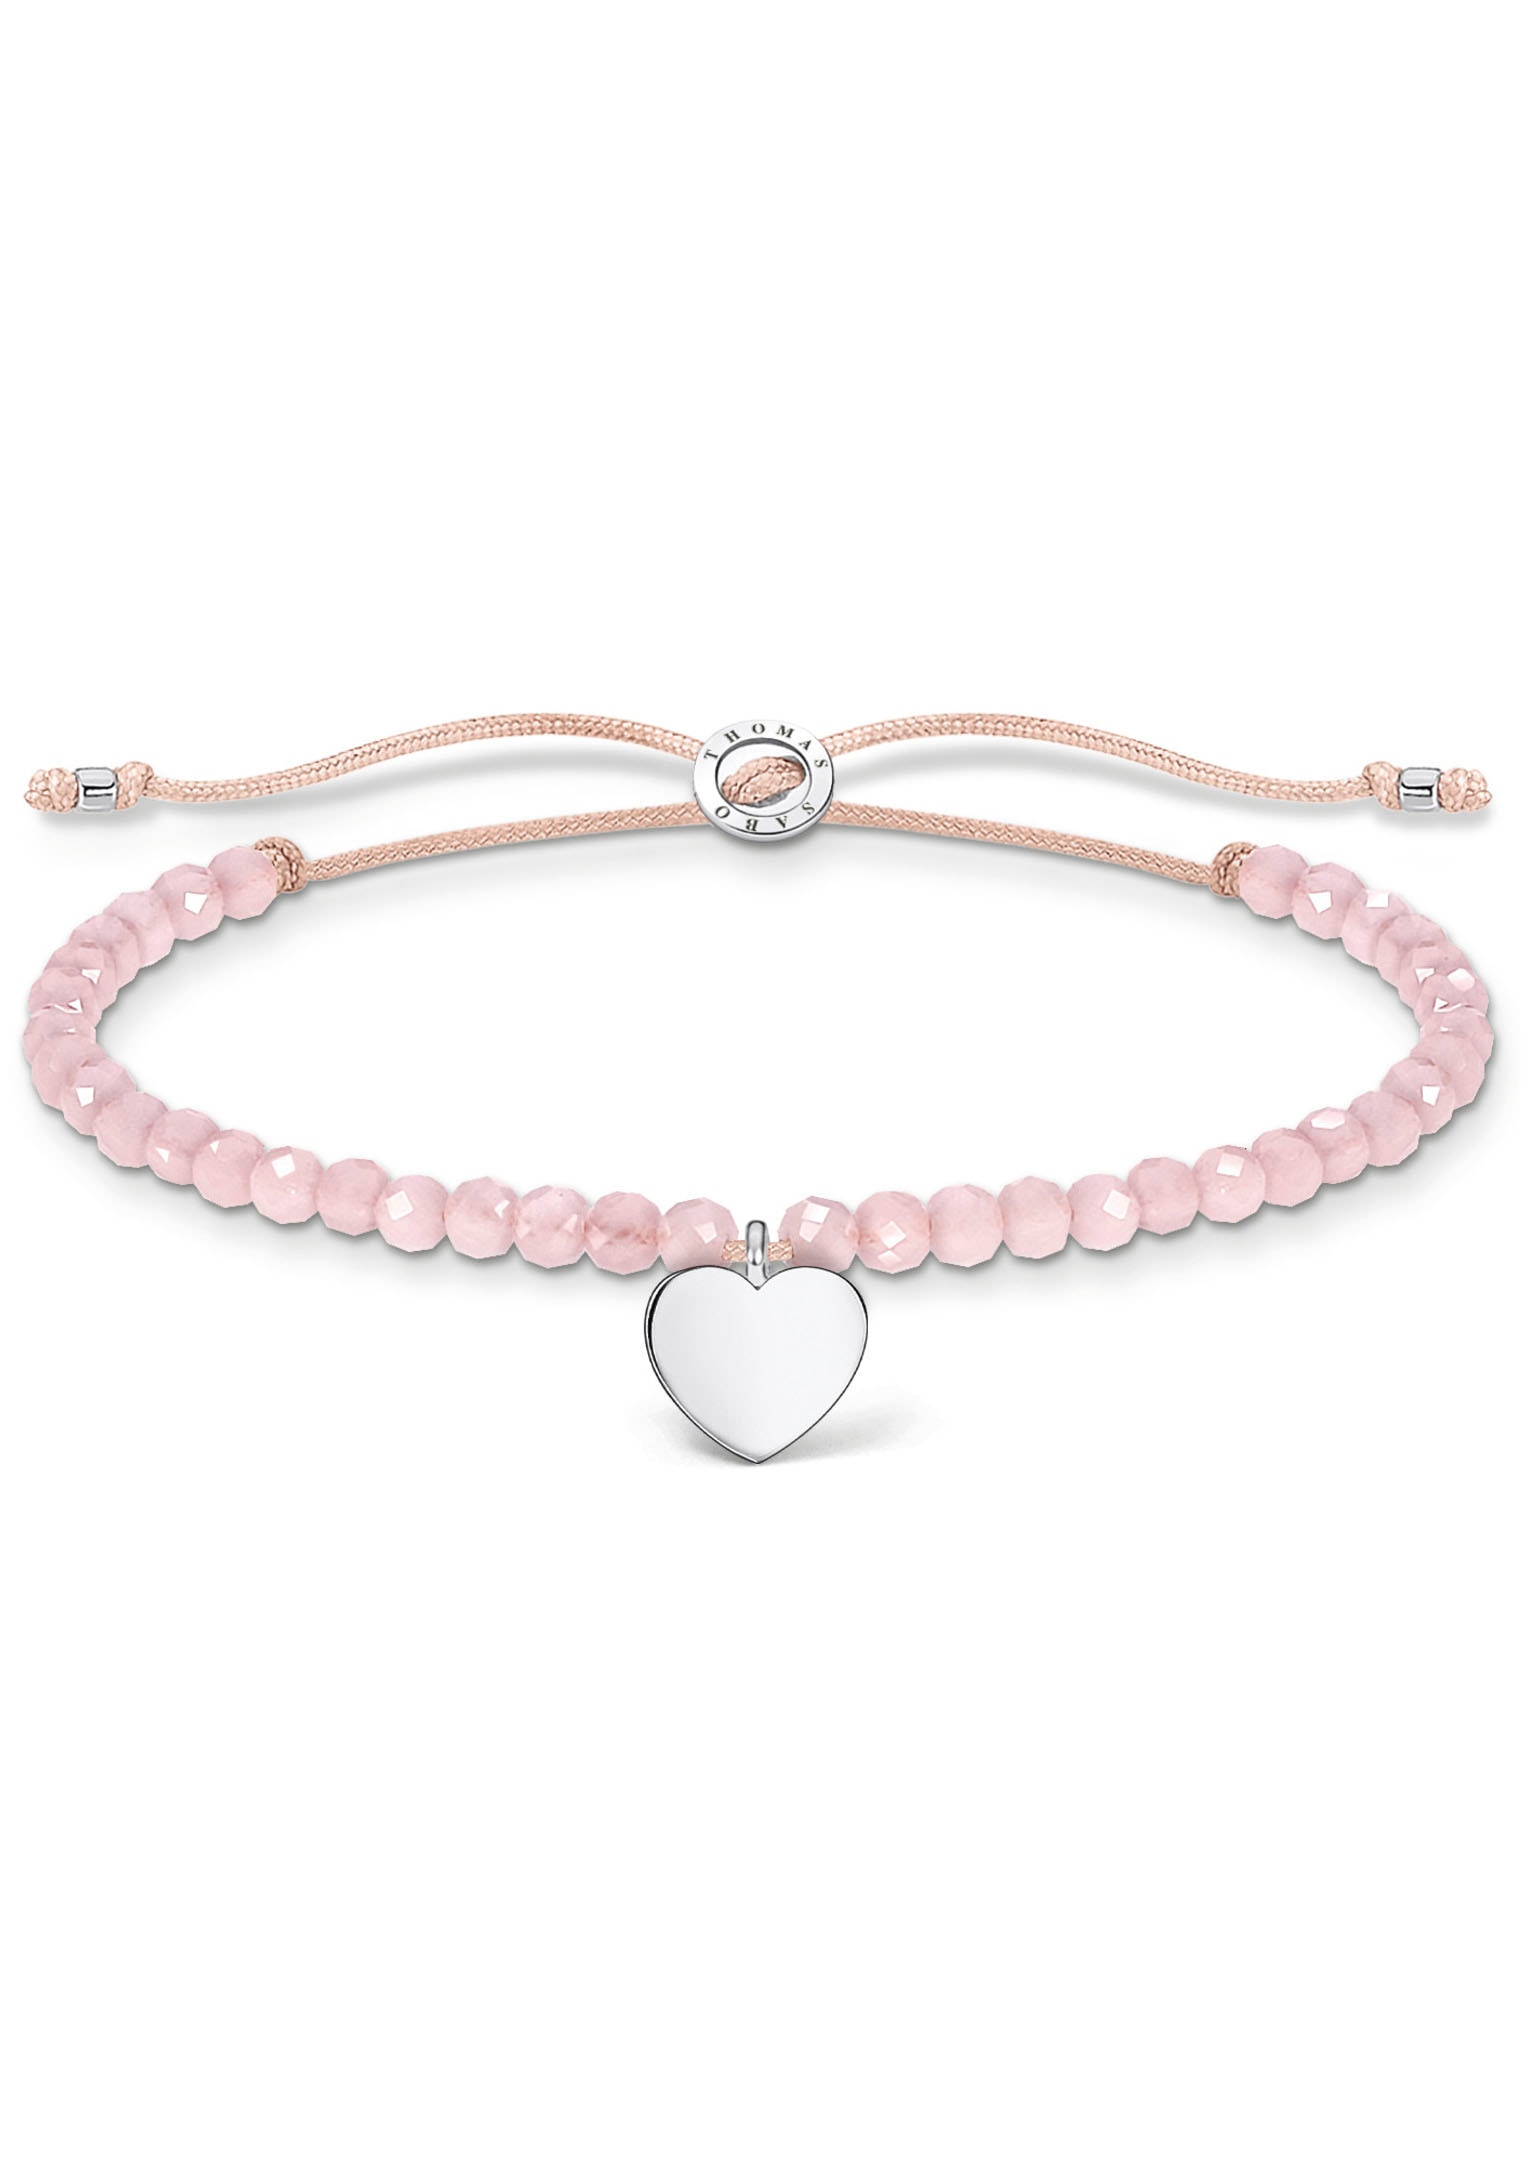 THOMAS SABO Armband »rosa Perlen mit Herz, roségold, A1985-813-9-L20V, A1985-893-9-L20V«, mit Rosenquarz oder Jaspis